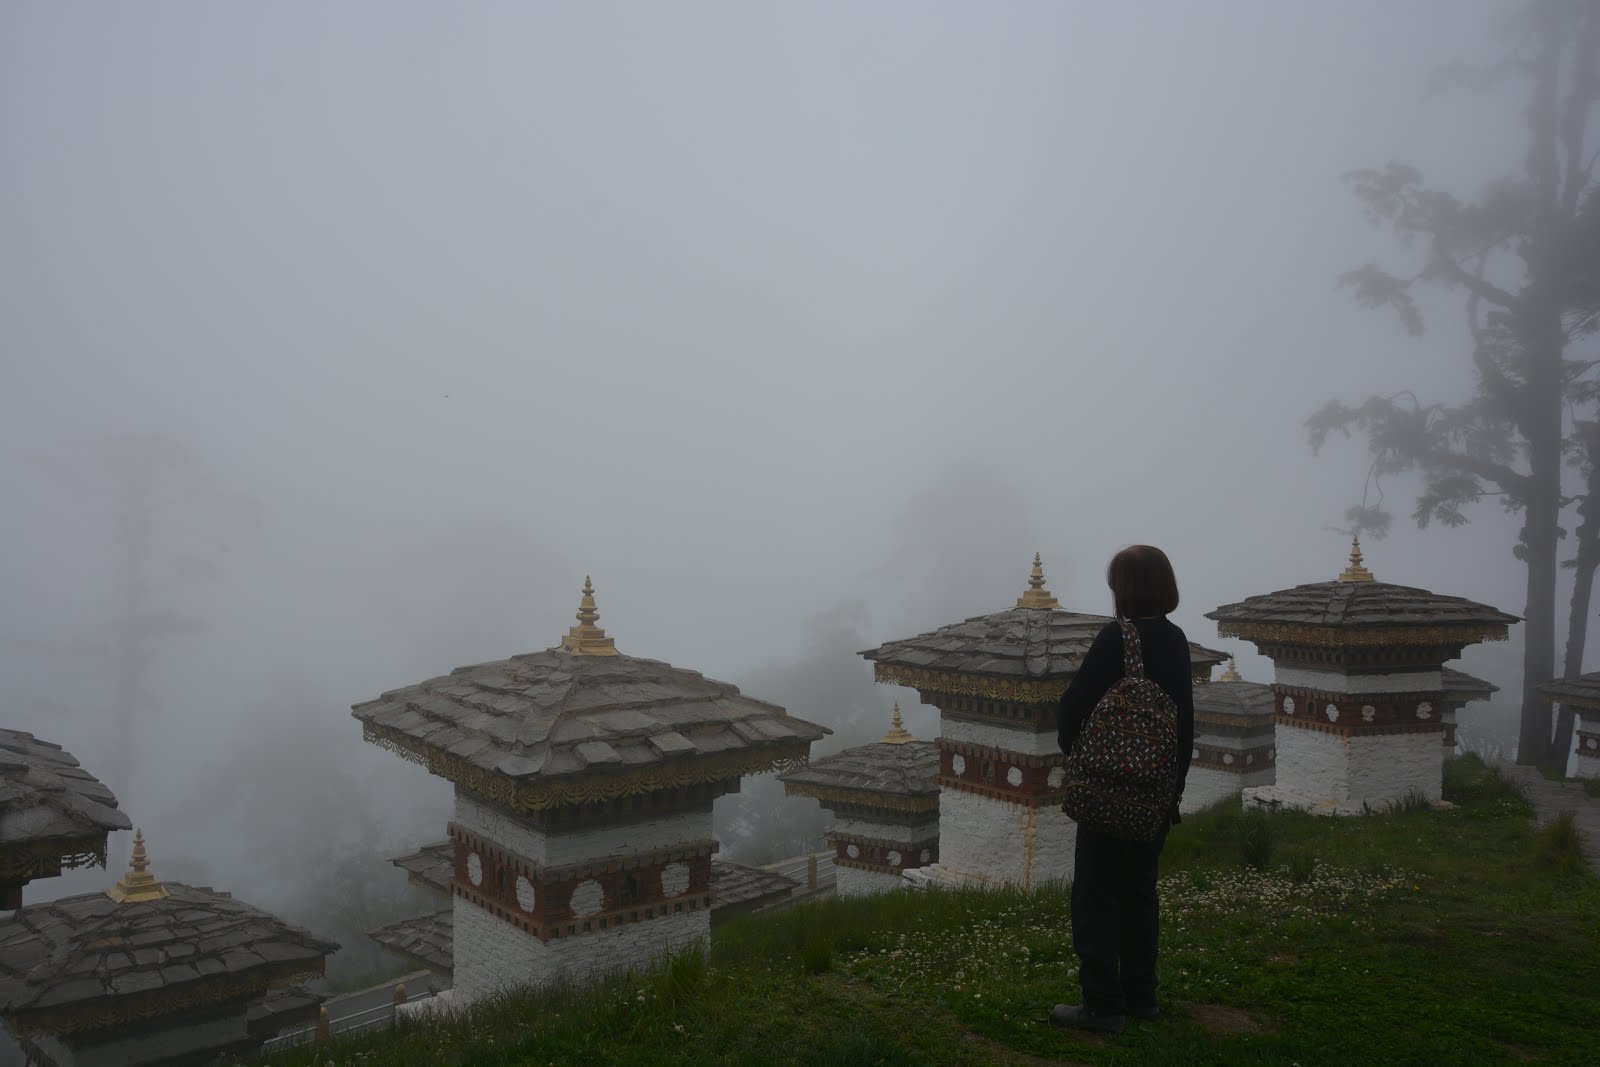 Dochula Pass@3000m, Bhutan